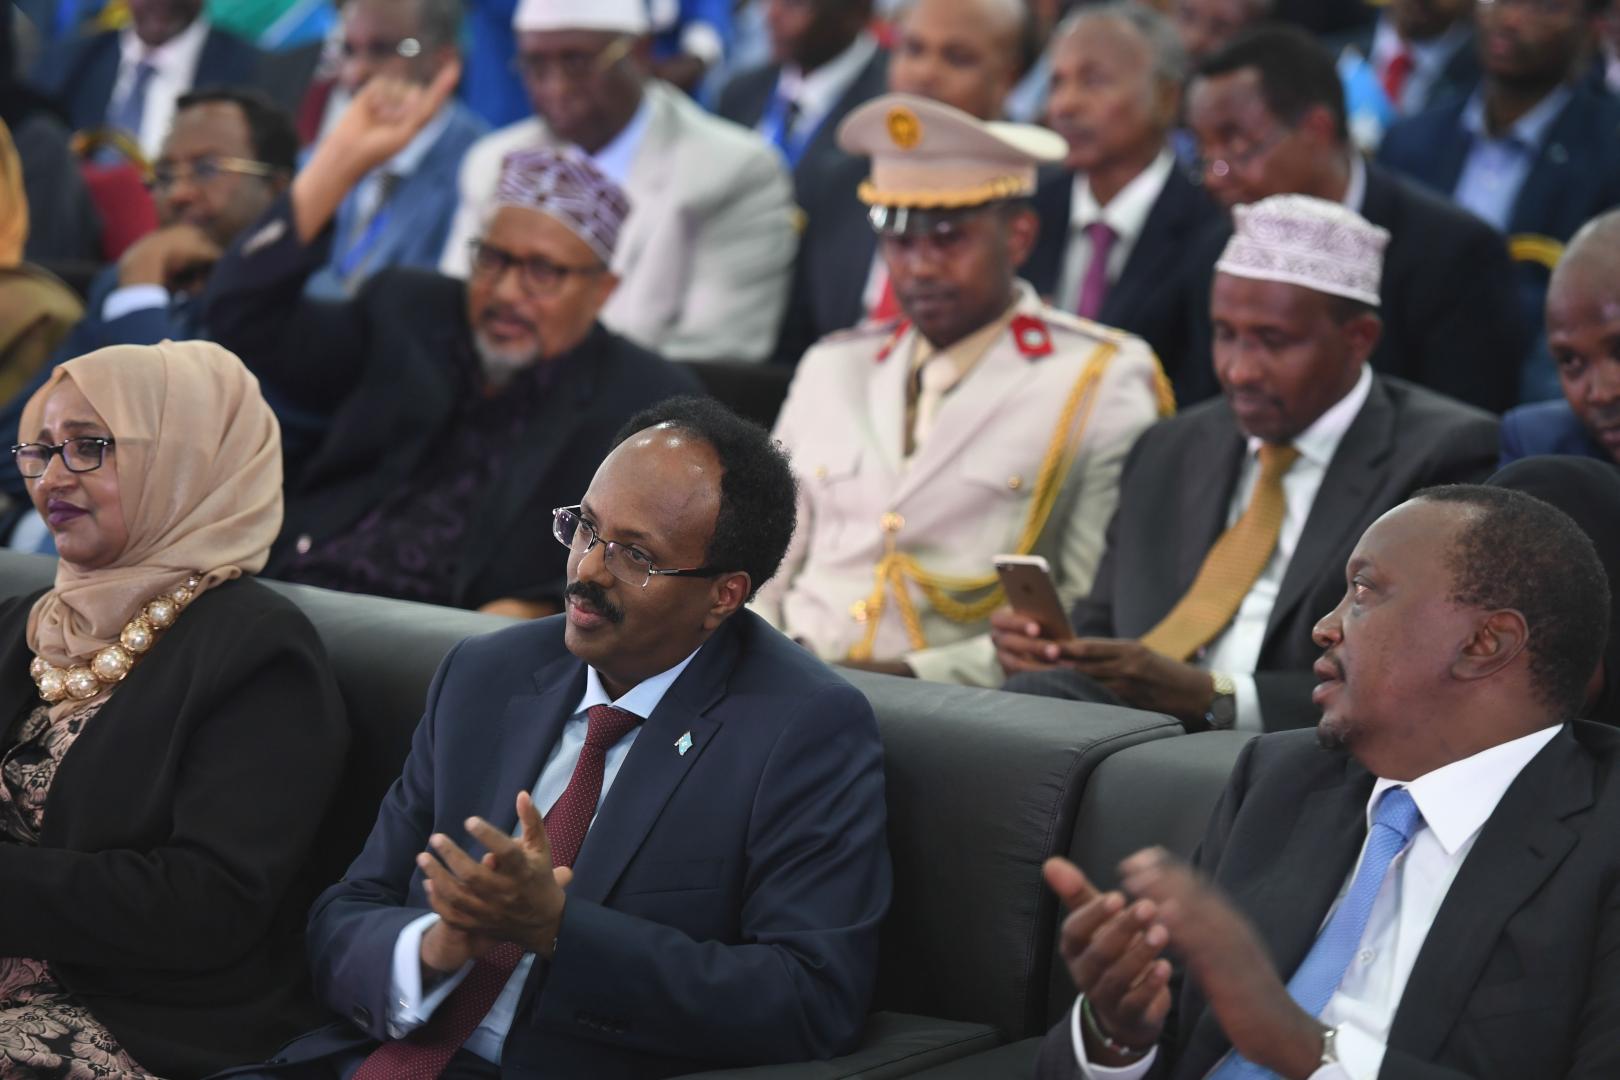 The President of Kenya, Uhuru Kenyatta (right), the President of Somalia Mohamed Abdullahi Farmajo (center( and other guests at the inauguration ceremony of President Farmajo in Mogadishu on February 22, 2017